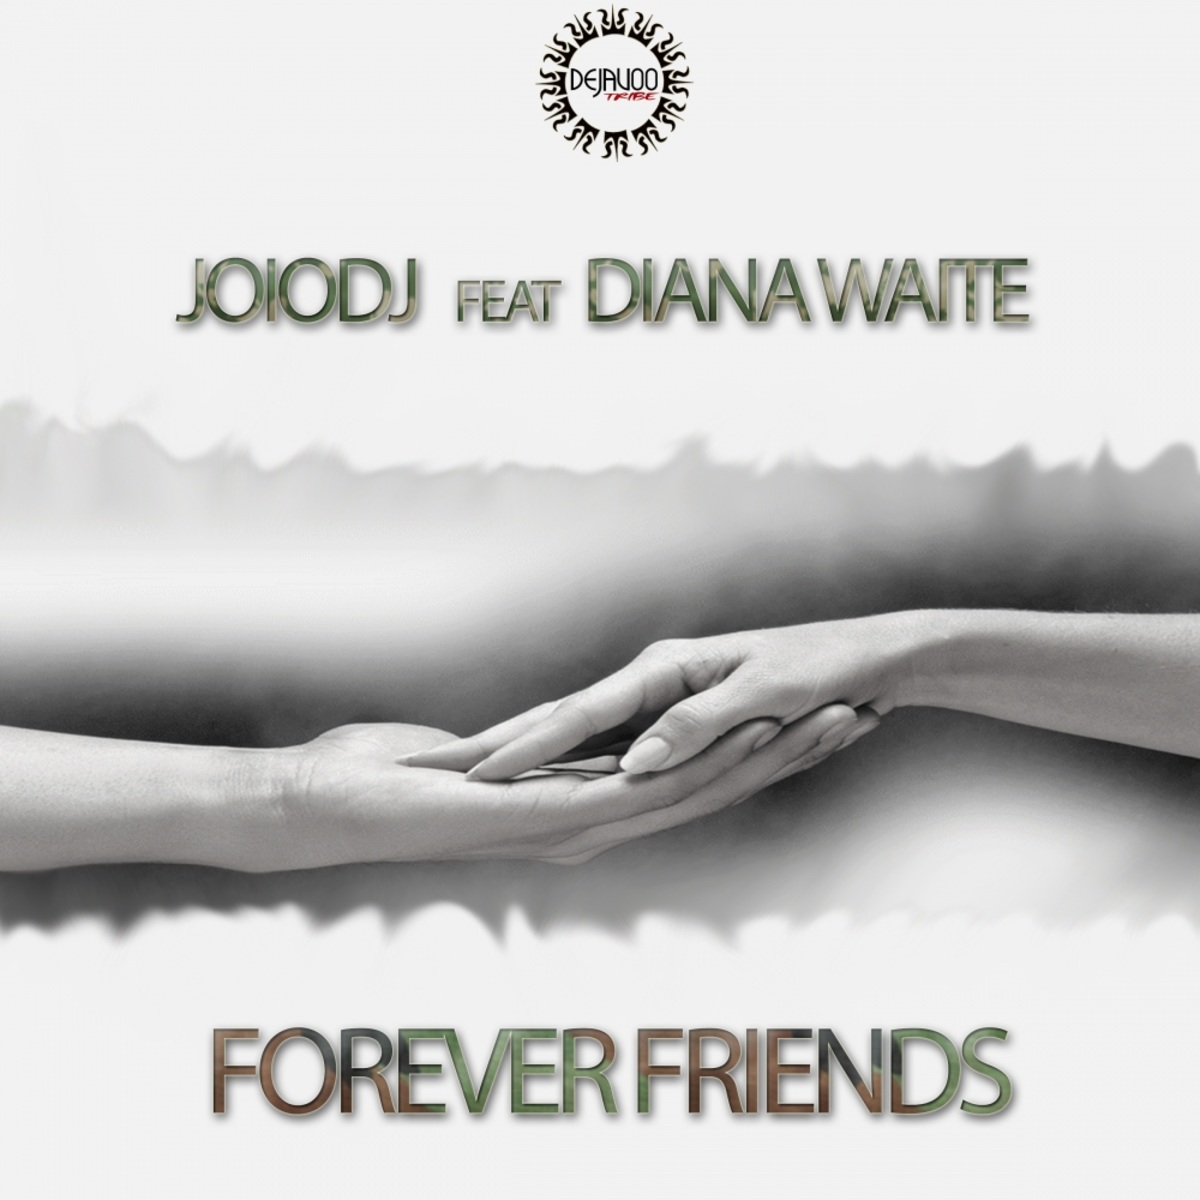 JoioDJ ft Diana Waite - Forever Friends / Dejavoo Tribe Records